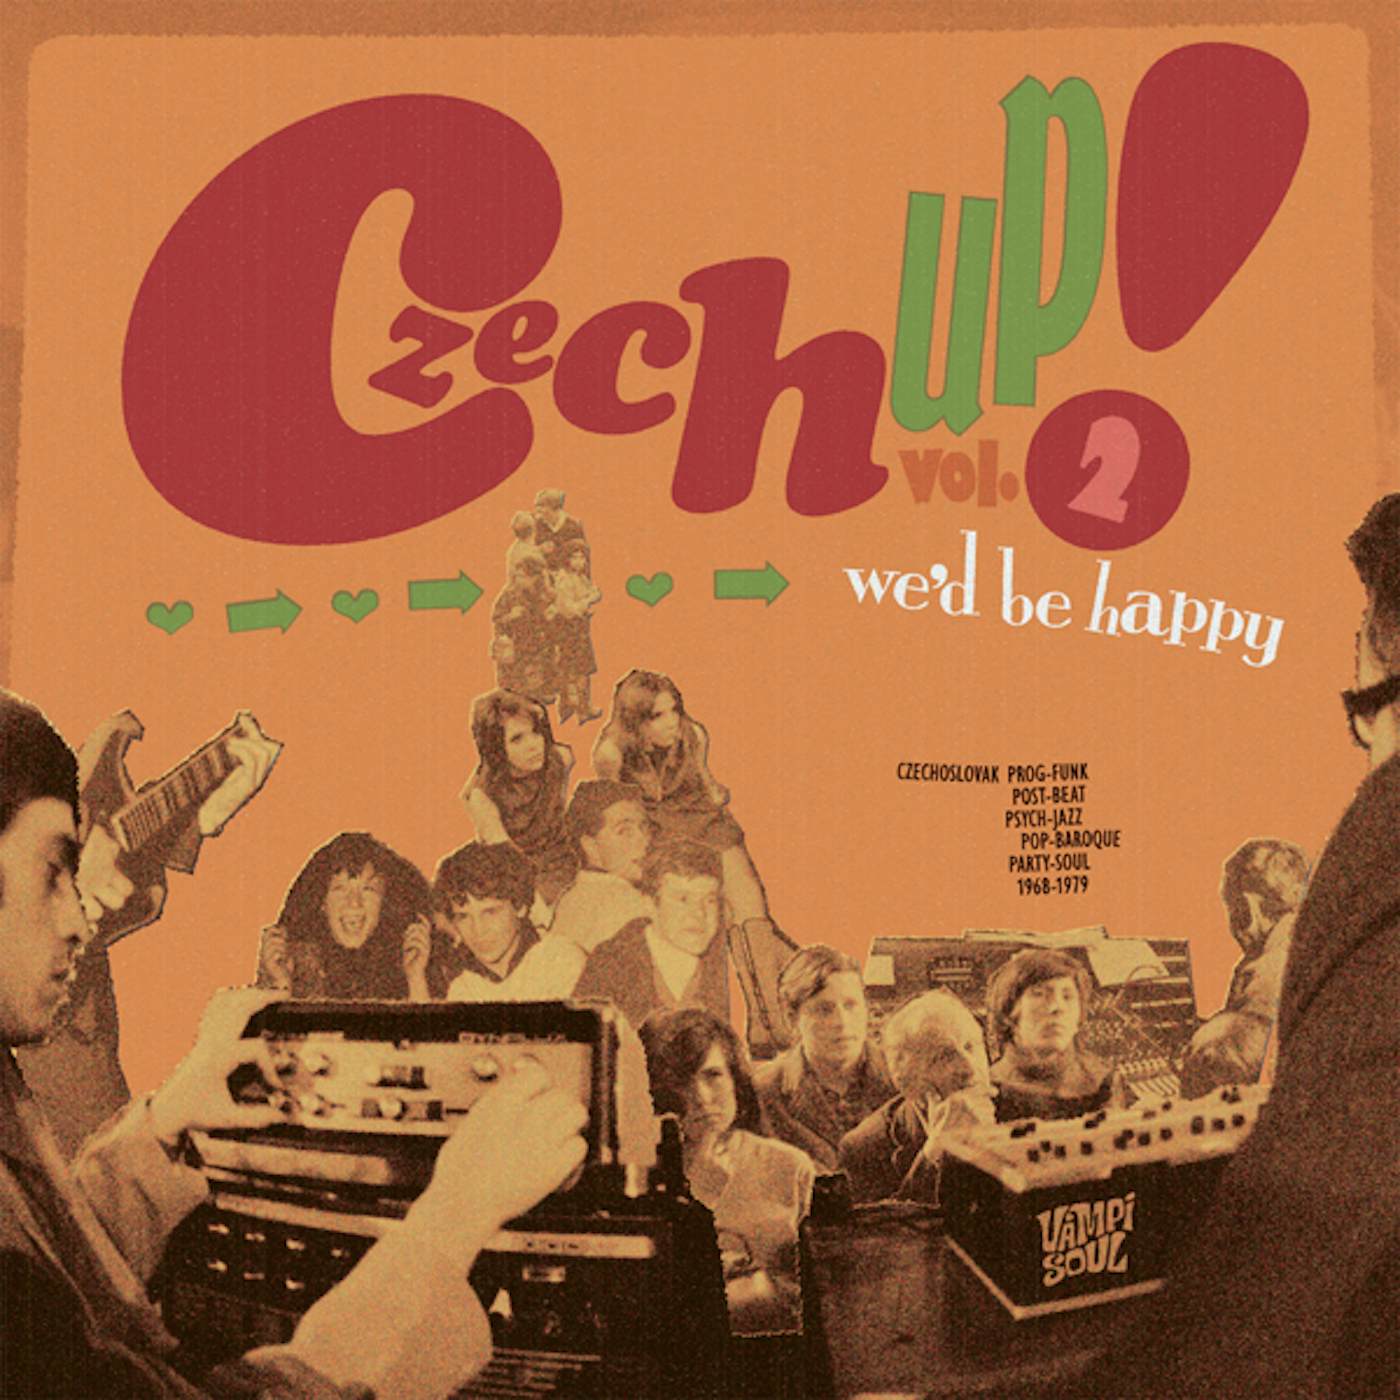 CZECH UP 2: WE'D BE HAPPY / VARIOUS Vinyl Record